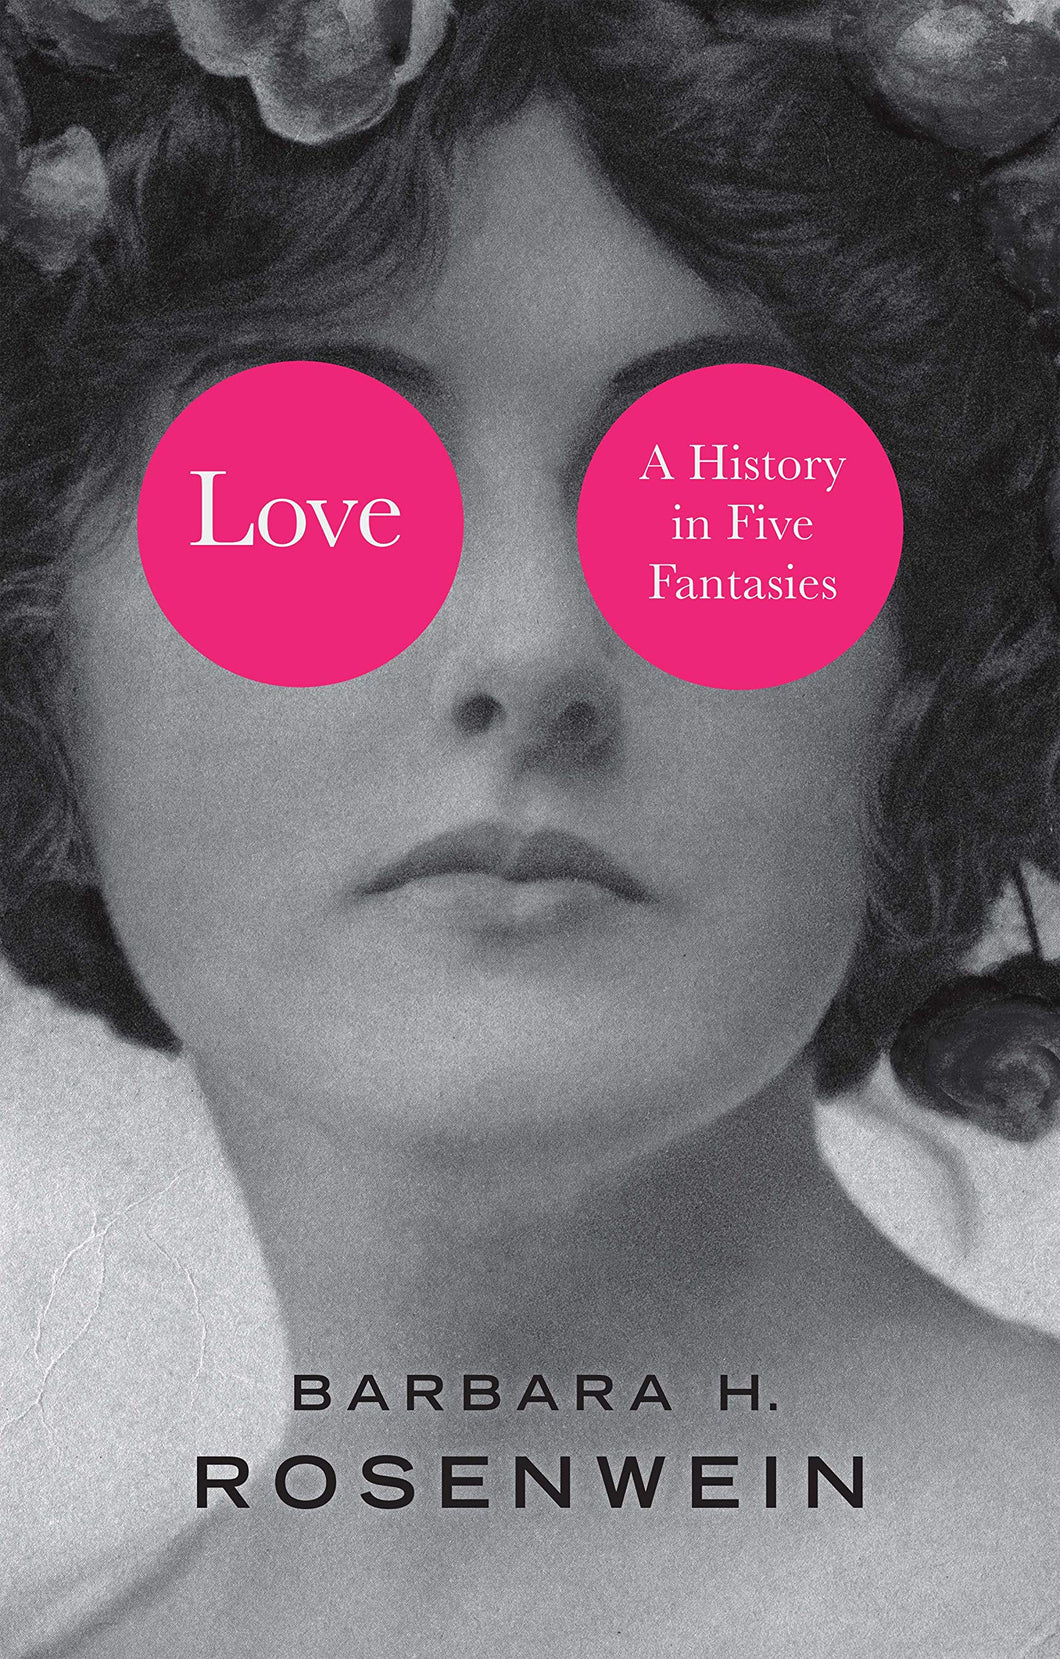 Love: A History in Five Fantasies ร้านหนังสือและสิ่งของ เป็นร้านหนังสือภาษาอังกฤษหายาก และร้านกาแฟ หรือ บุ๊คคาเฟ่ ตั้งอยู่สุขุมวิท กรุงเทพ